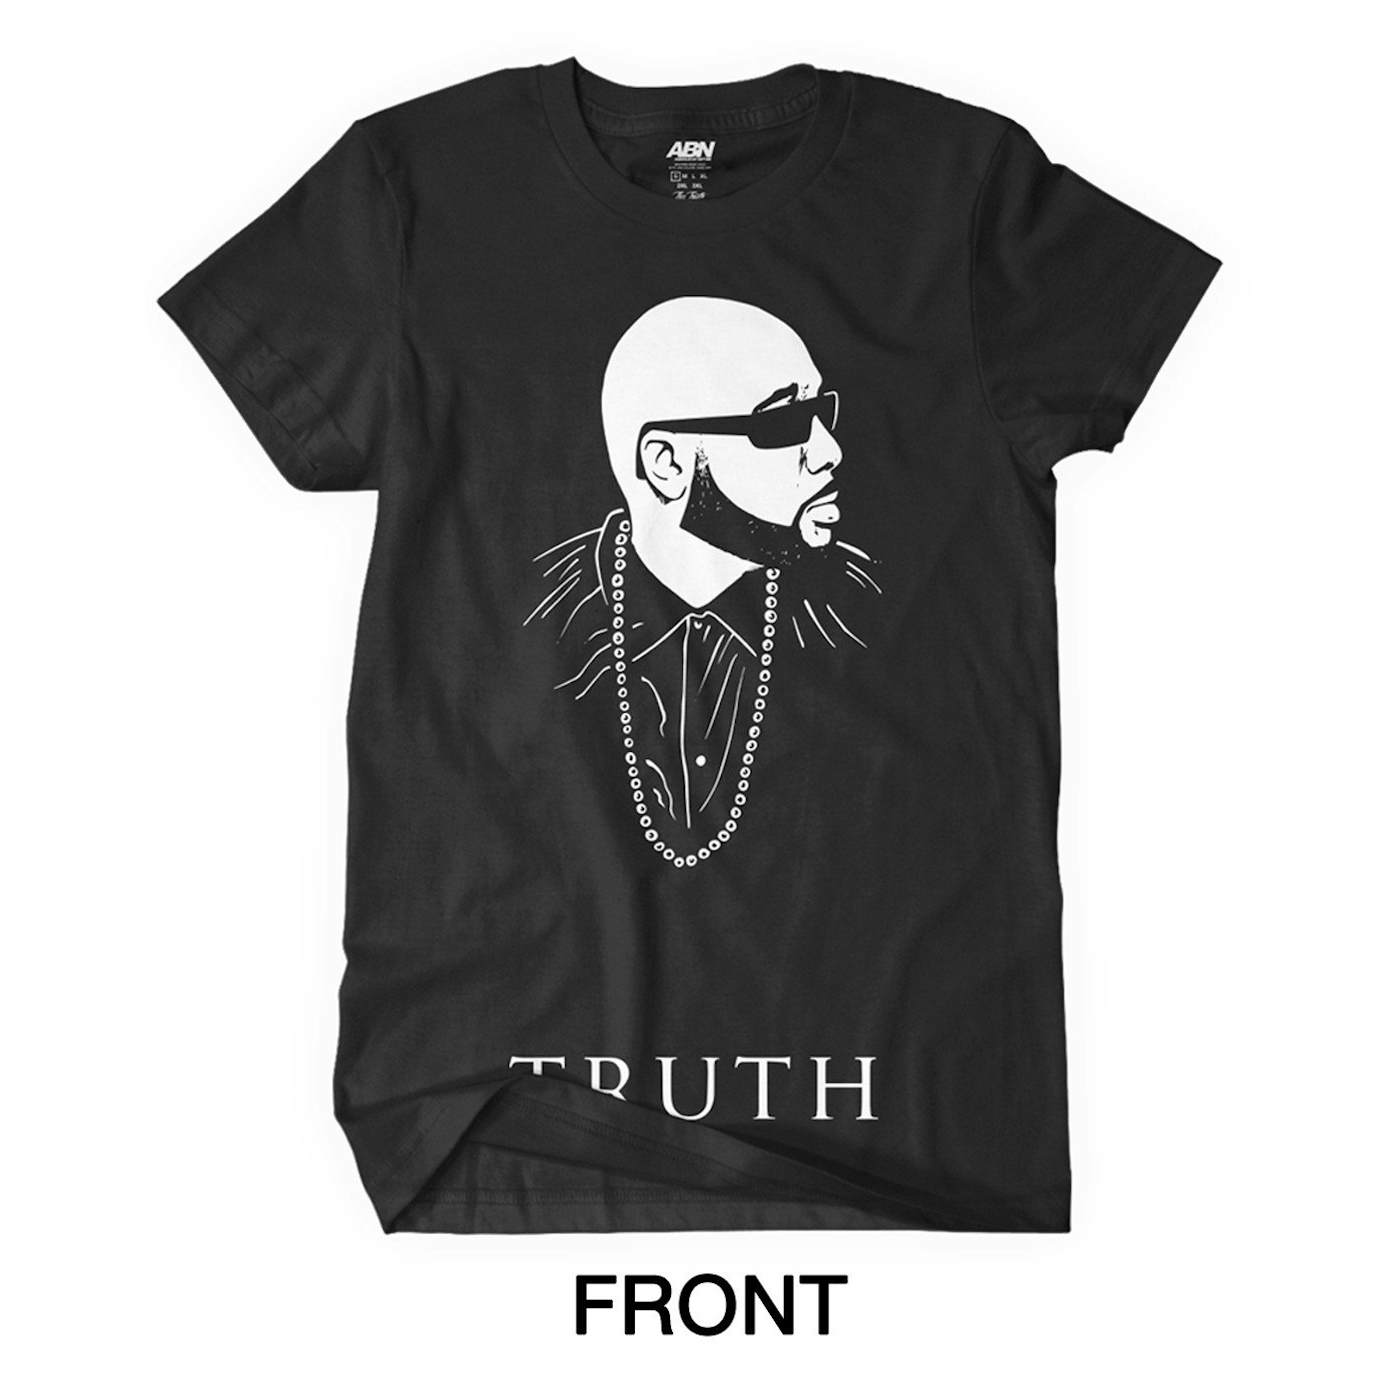 Trae tha Truth & The Worlds Freshest - "Tha Truth" CD + T-Shirt Bundle